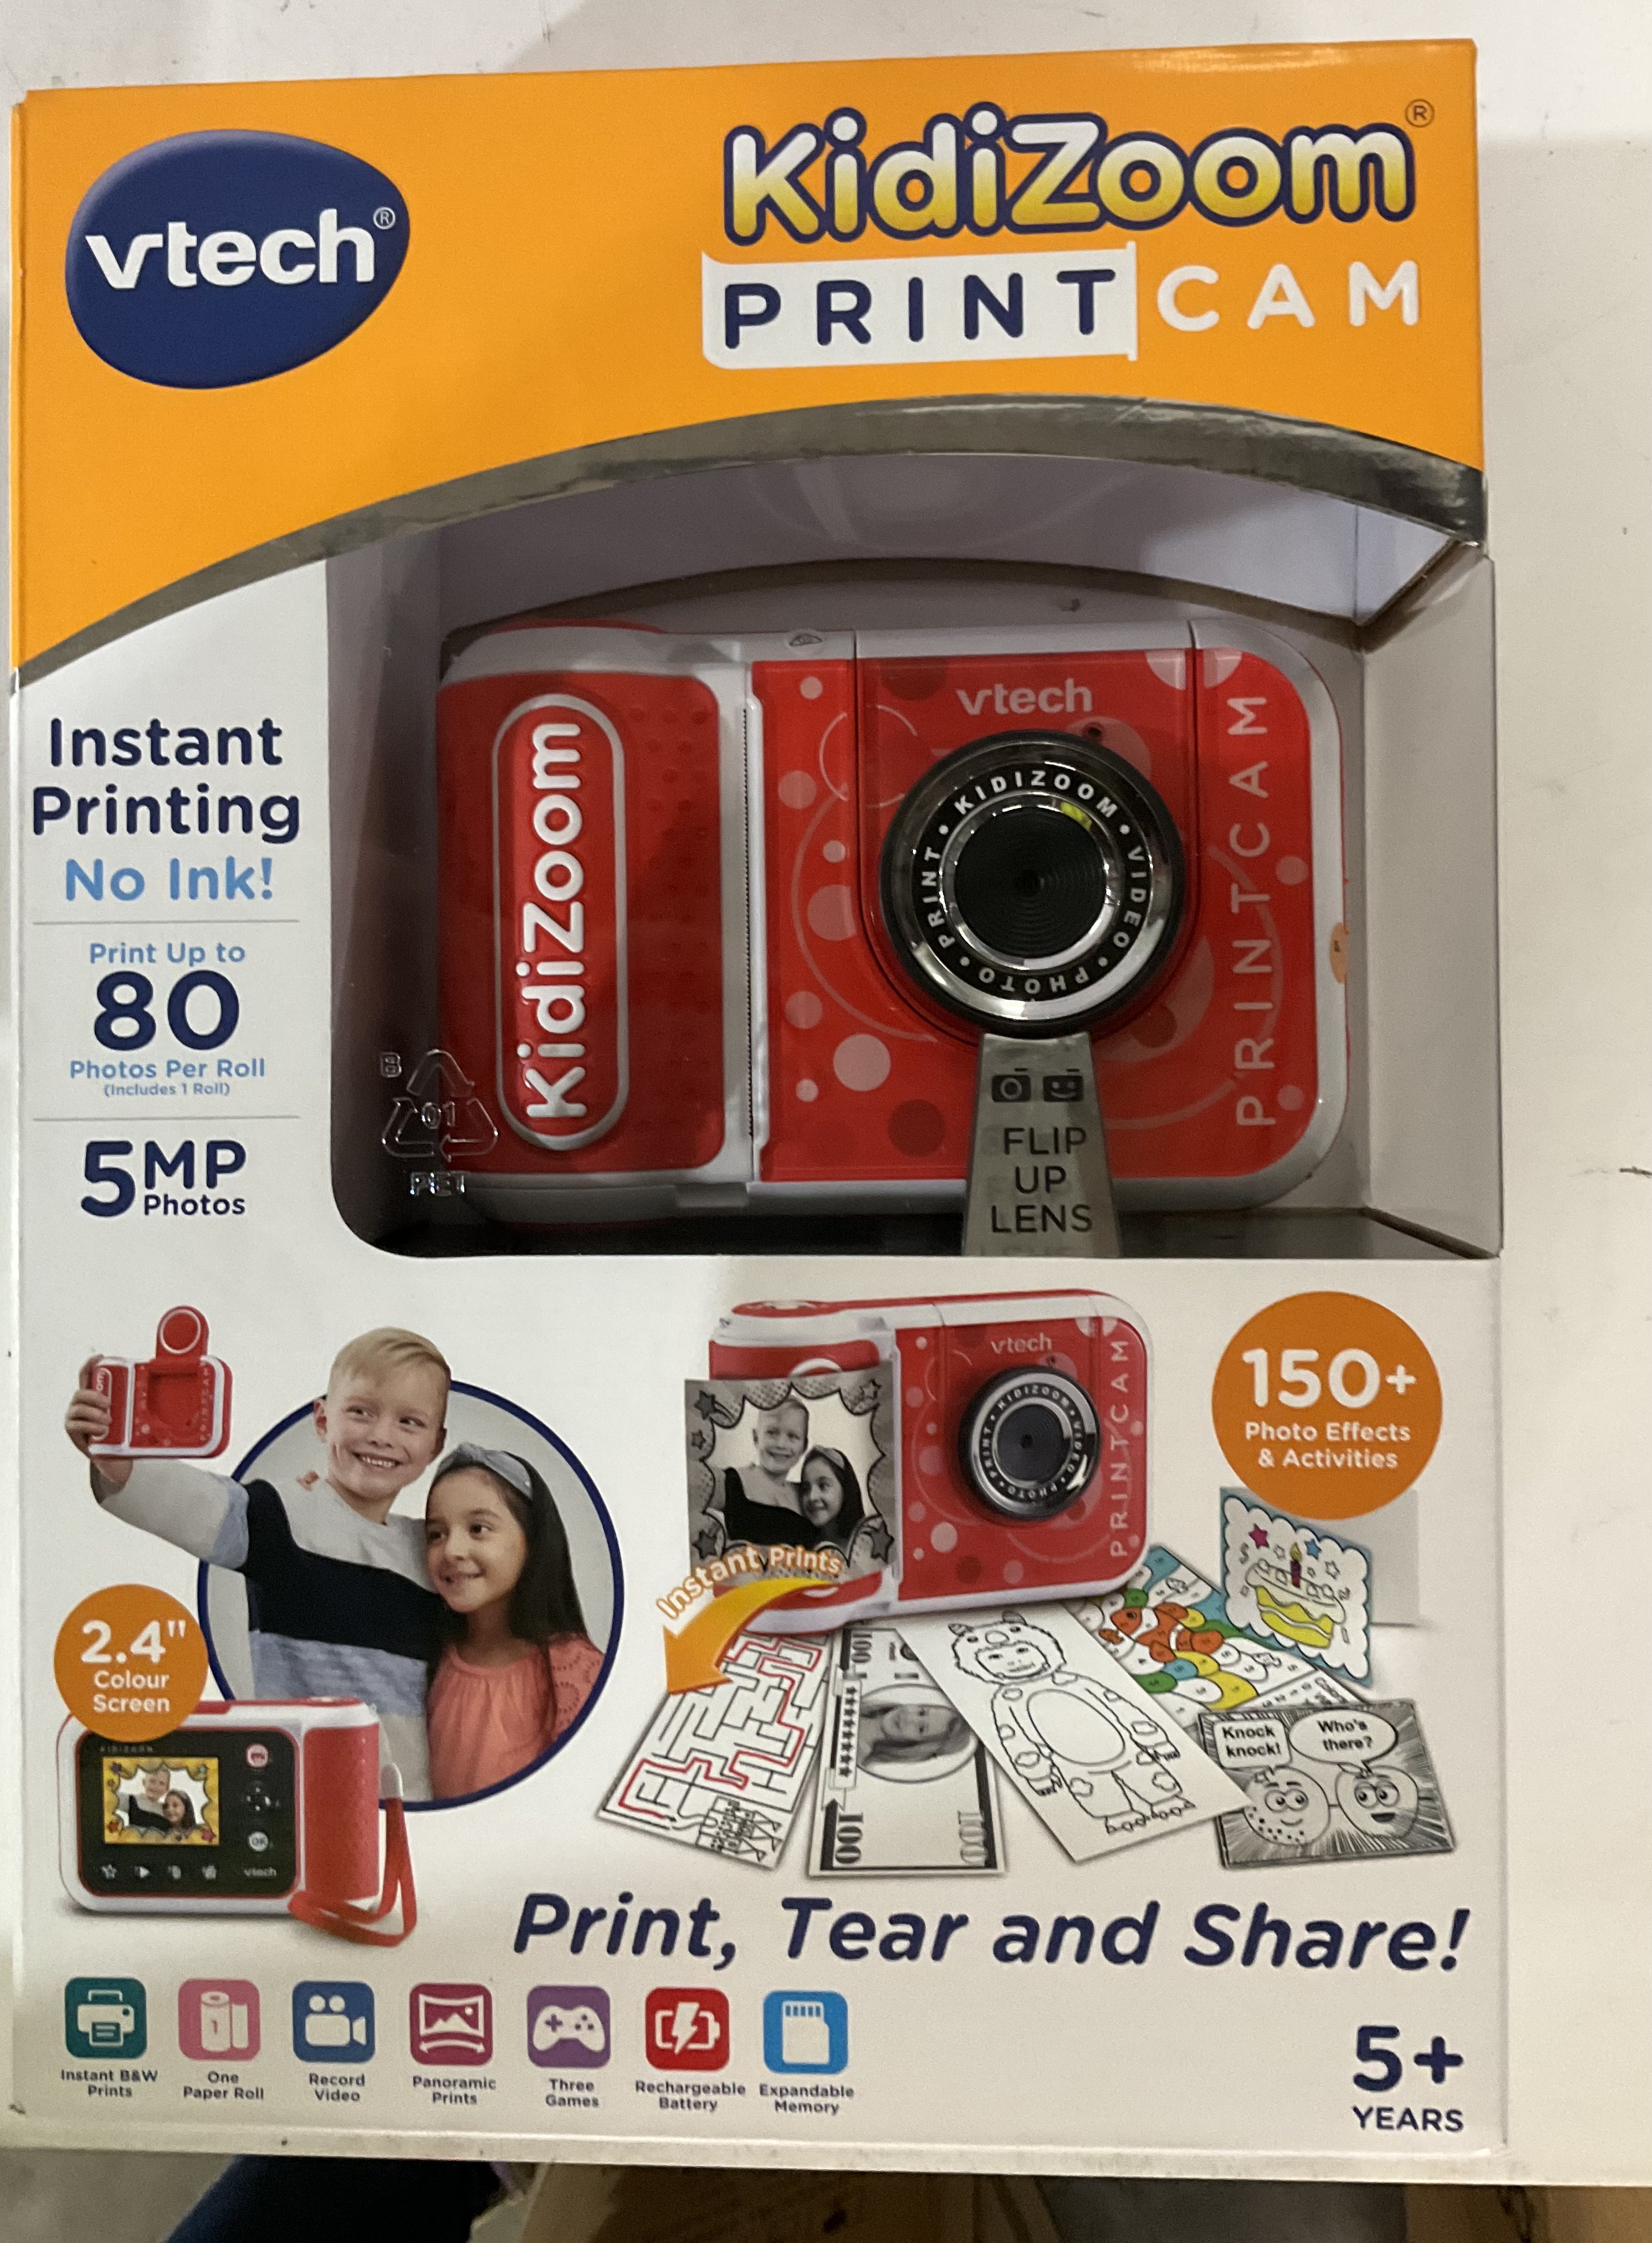 Vtech Kidizoom Print Cam Instant Printing No Ink 80 Photos Per